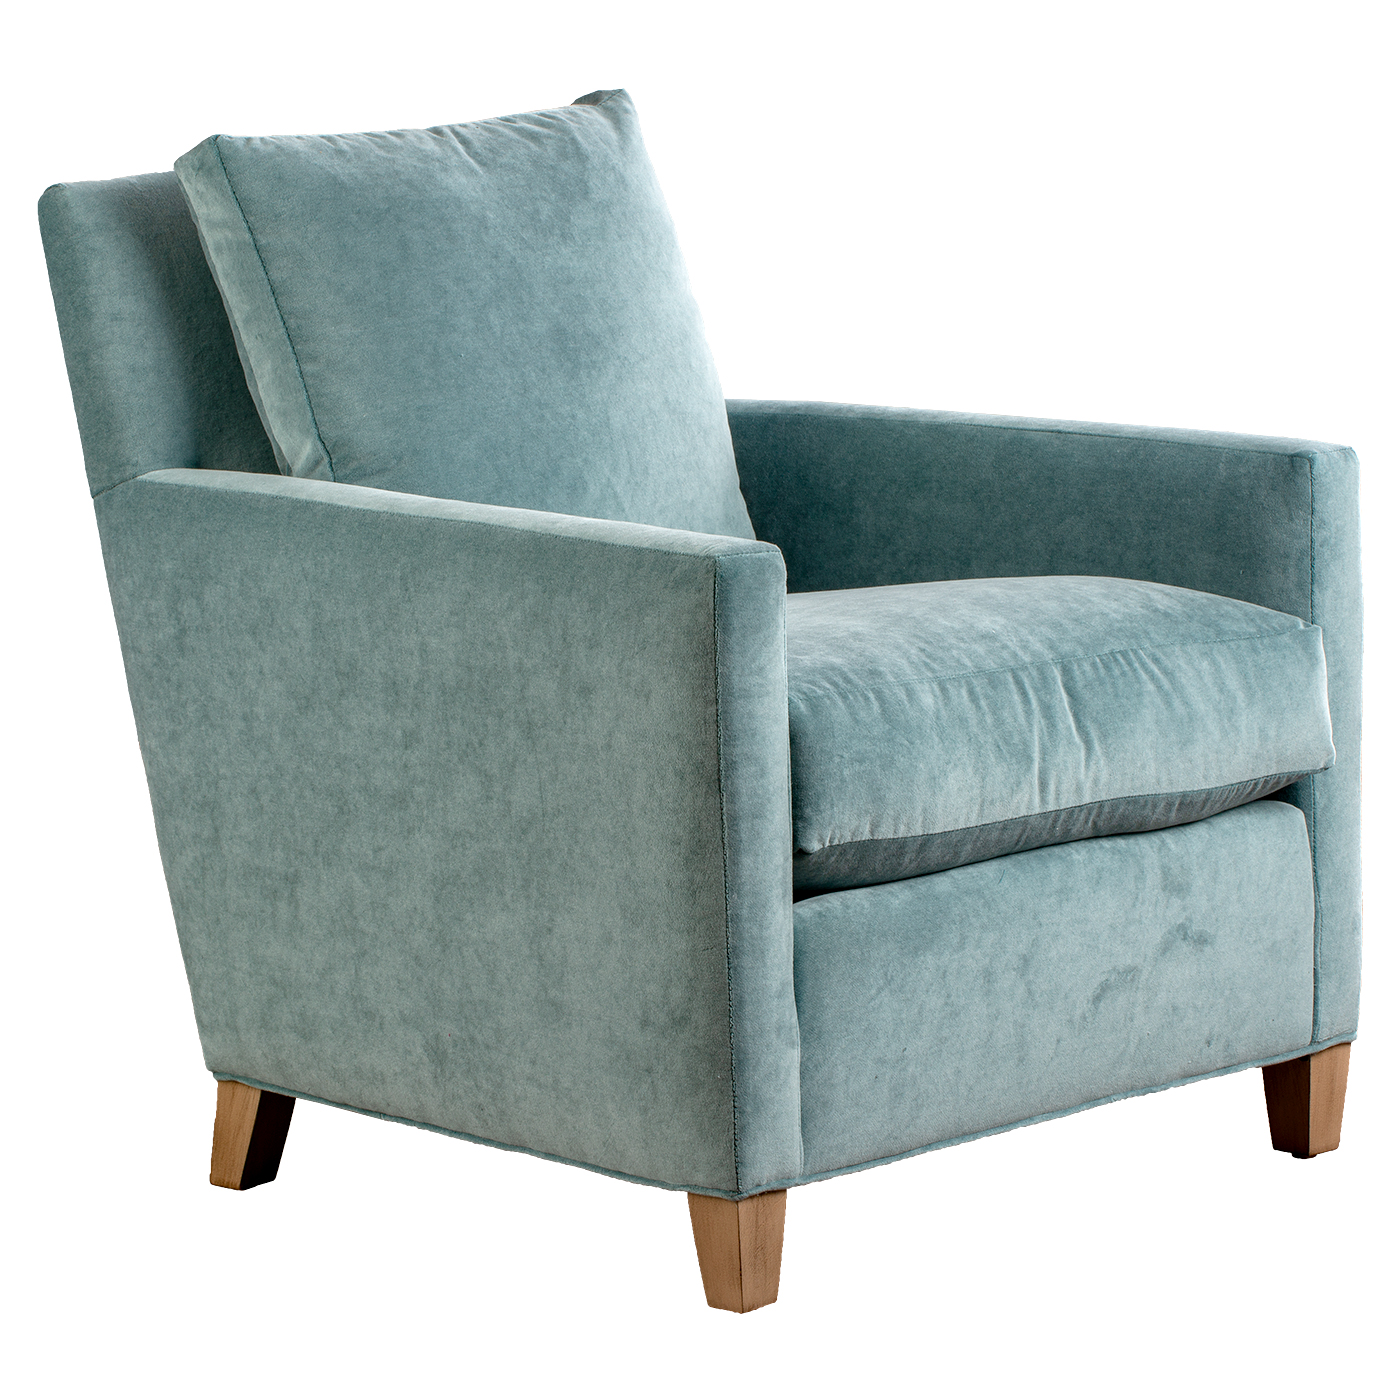 Caden Slate Blue Upholstered Chair Mecox Gardens